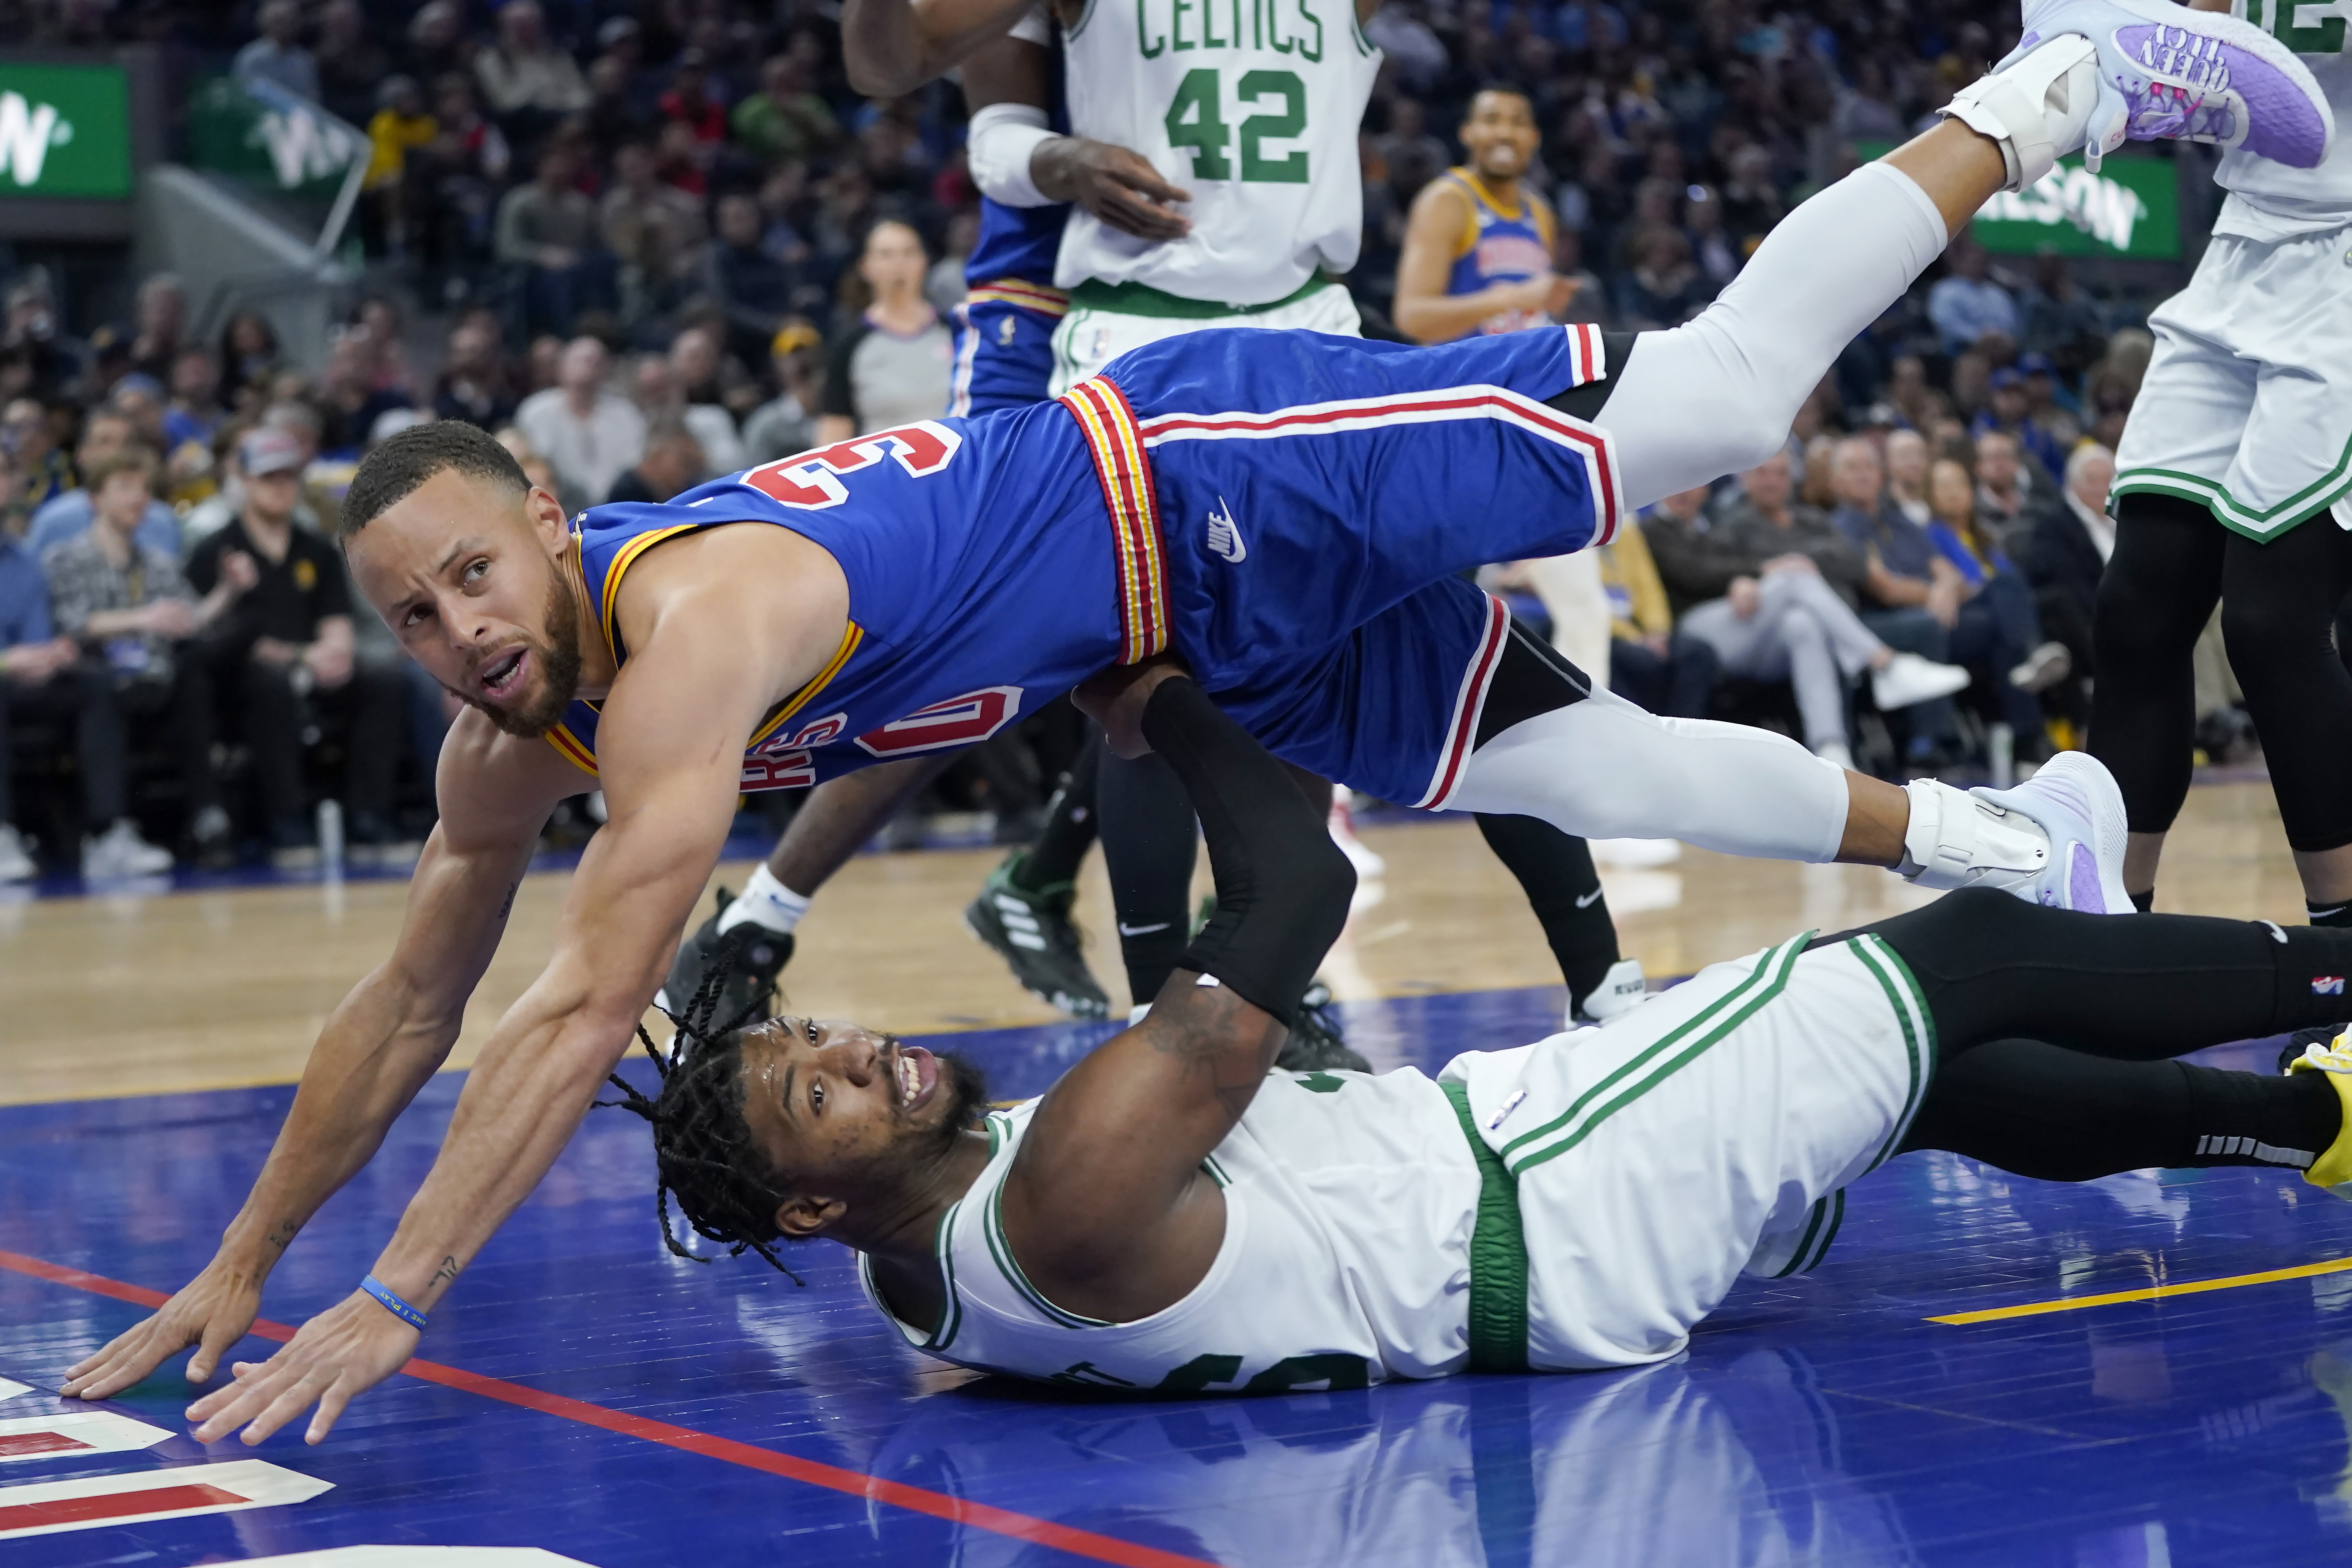 NBA: Celtics, Warriors not at full strength entering finals rematch